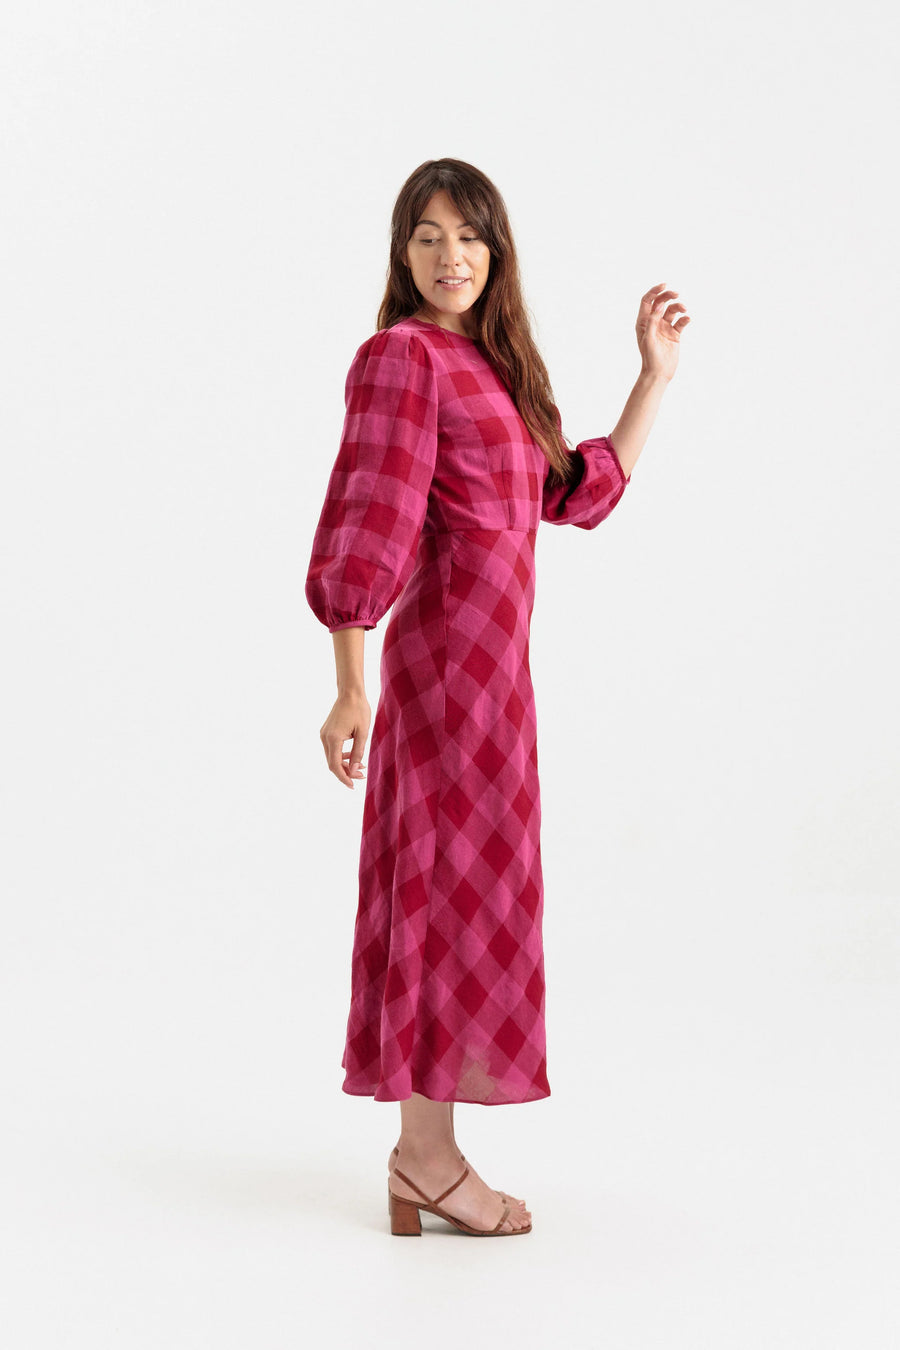 Lulee Dress/Skirt pattern- Papercuts